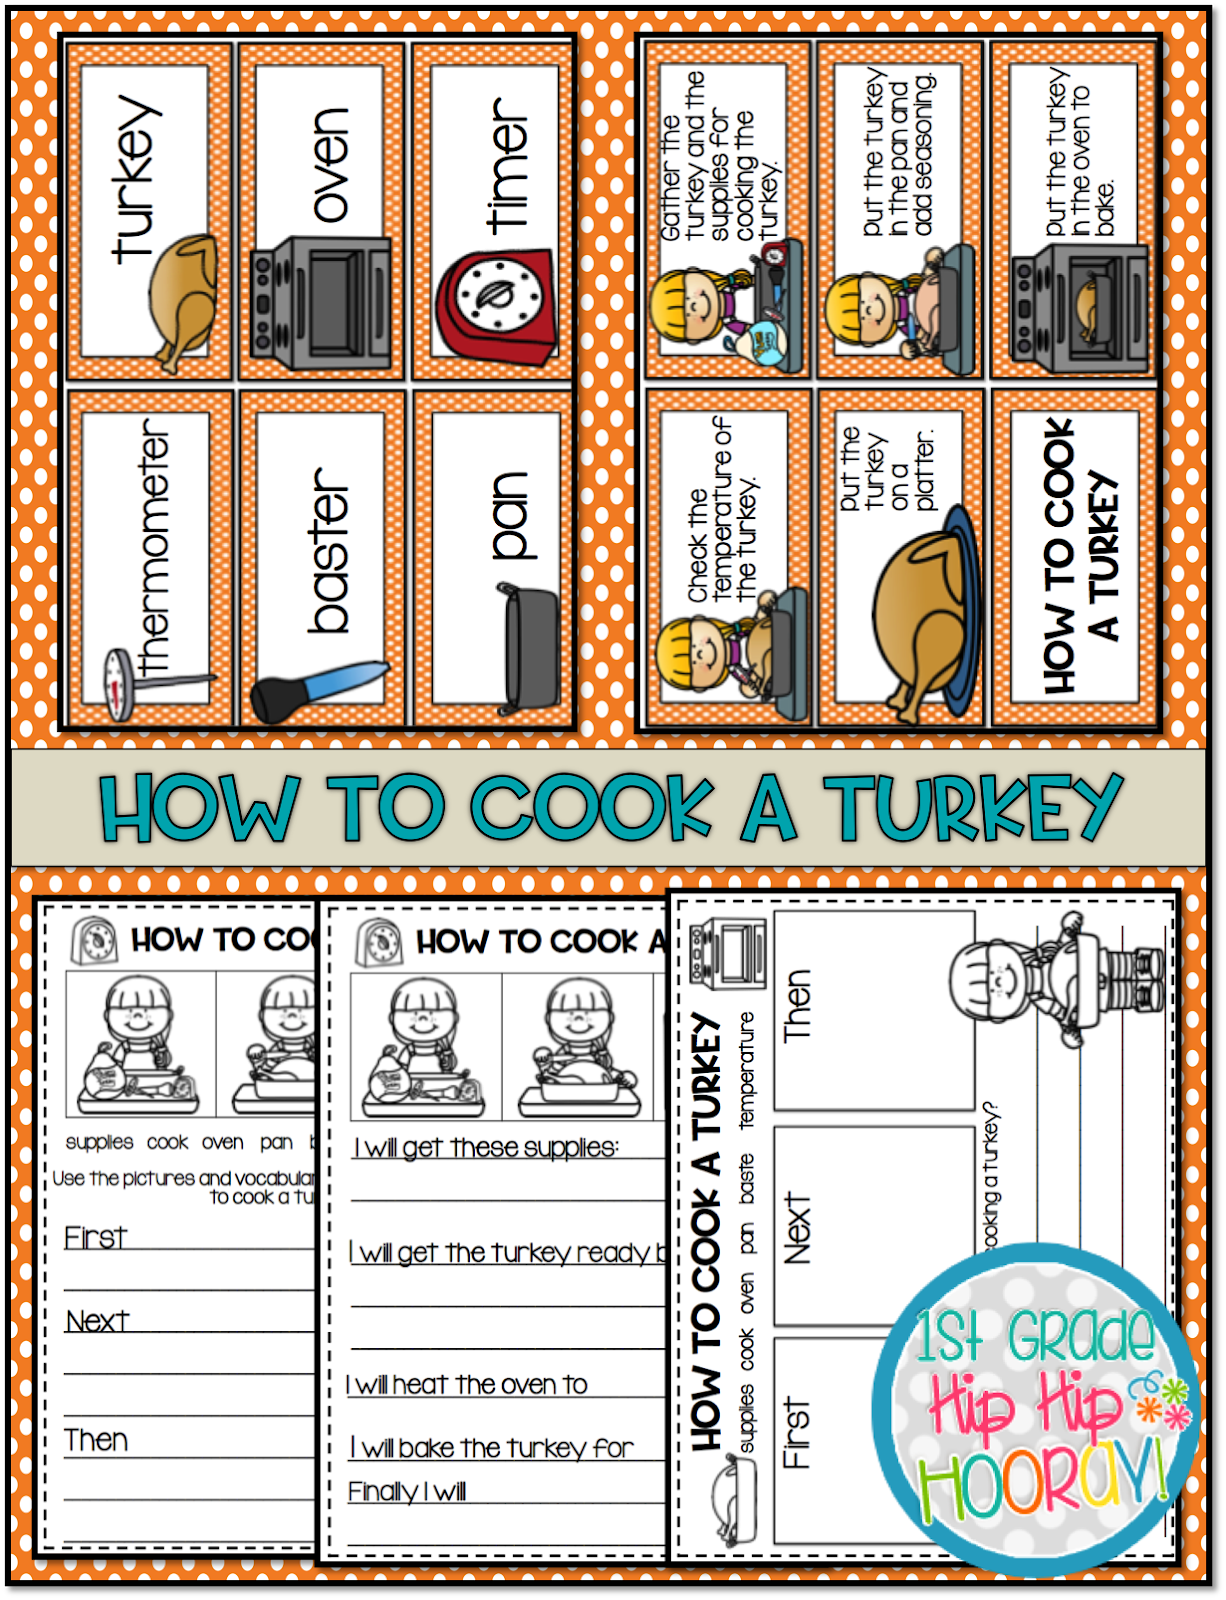 1st Grade Hip Hip Hooray!: How to Cook A Turkey!